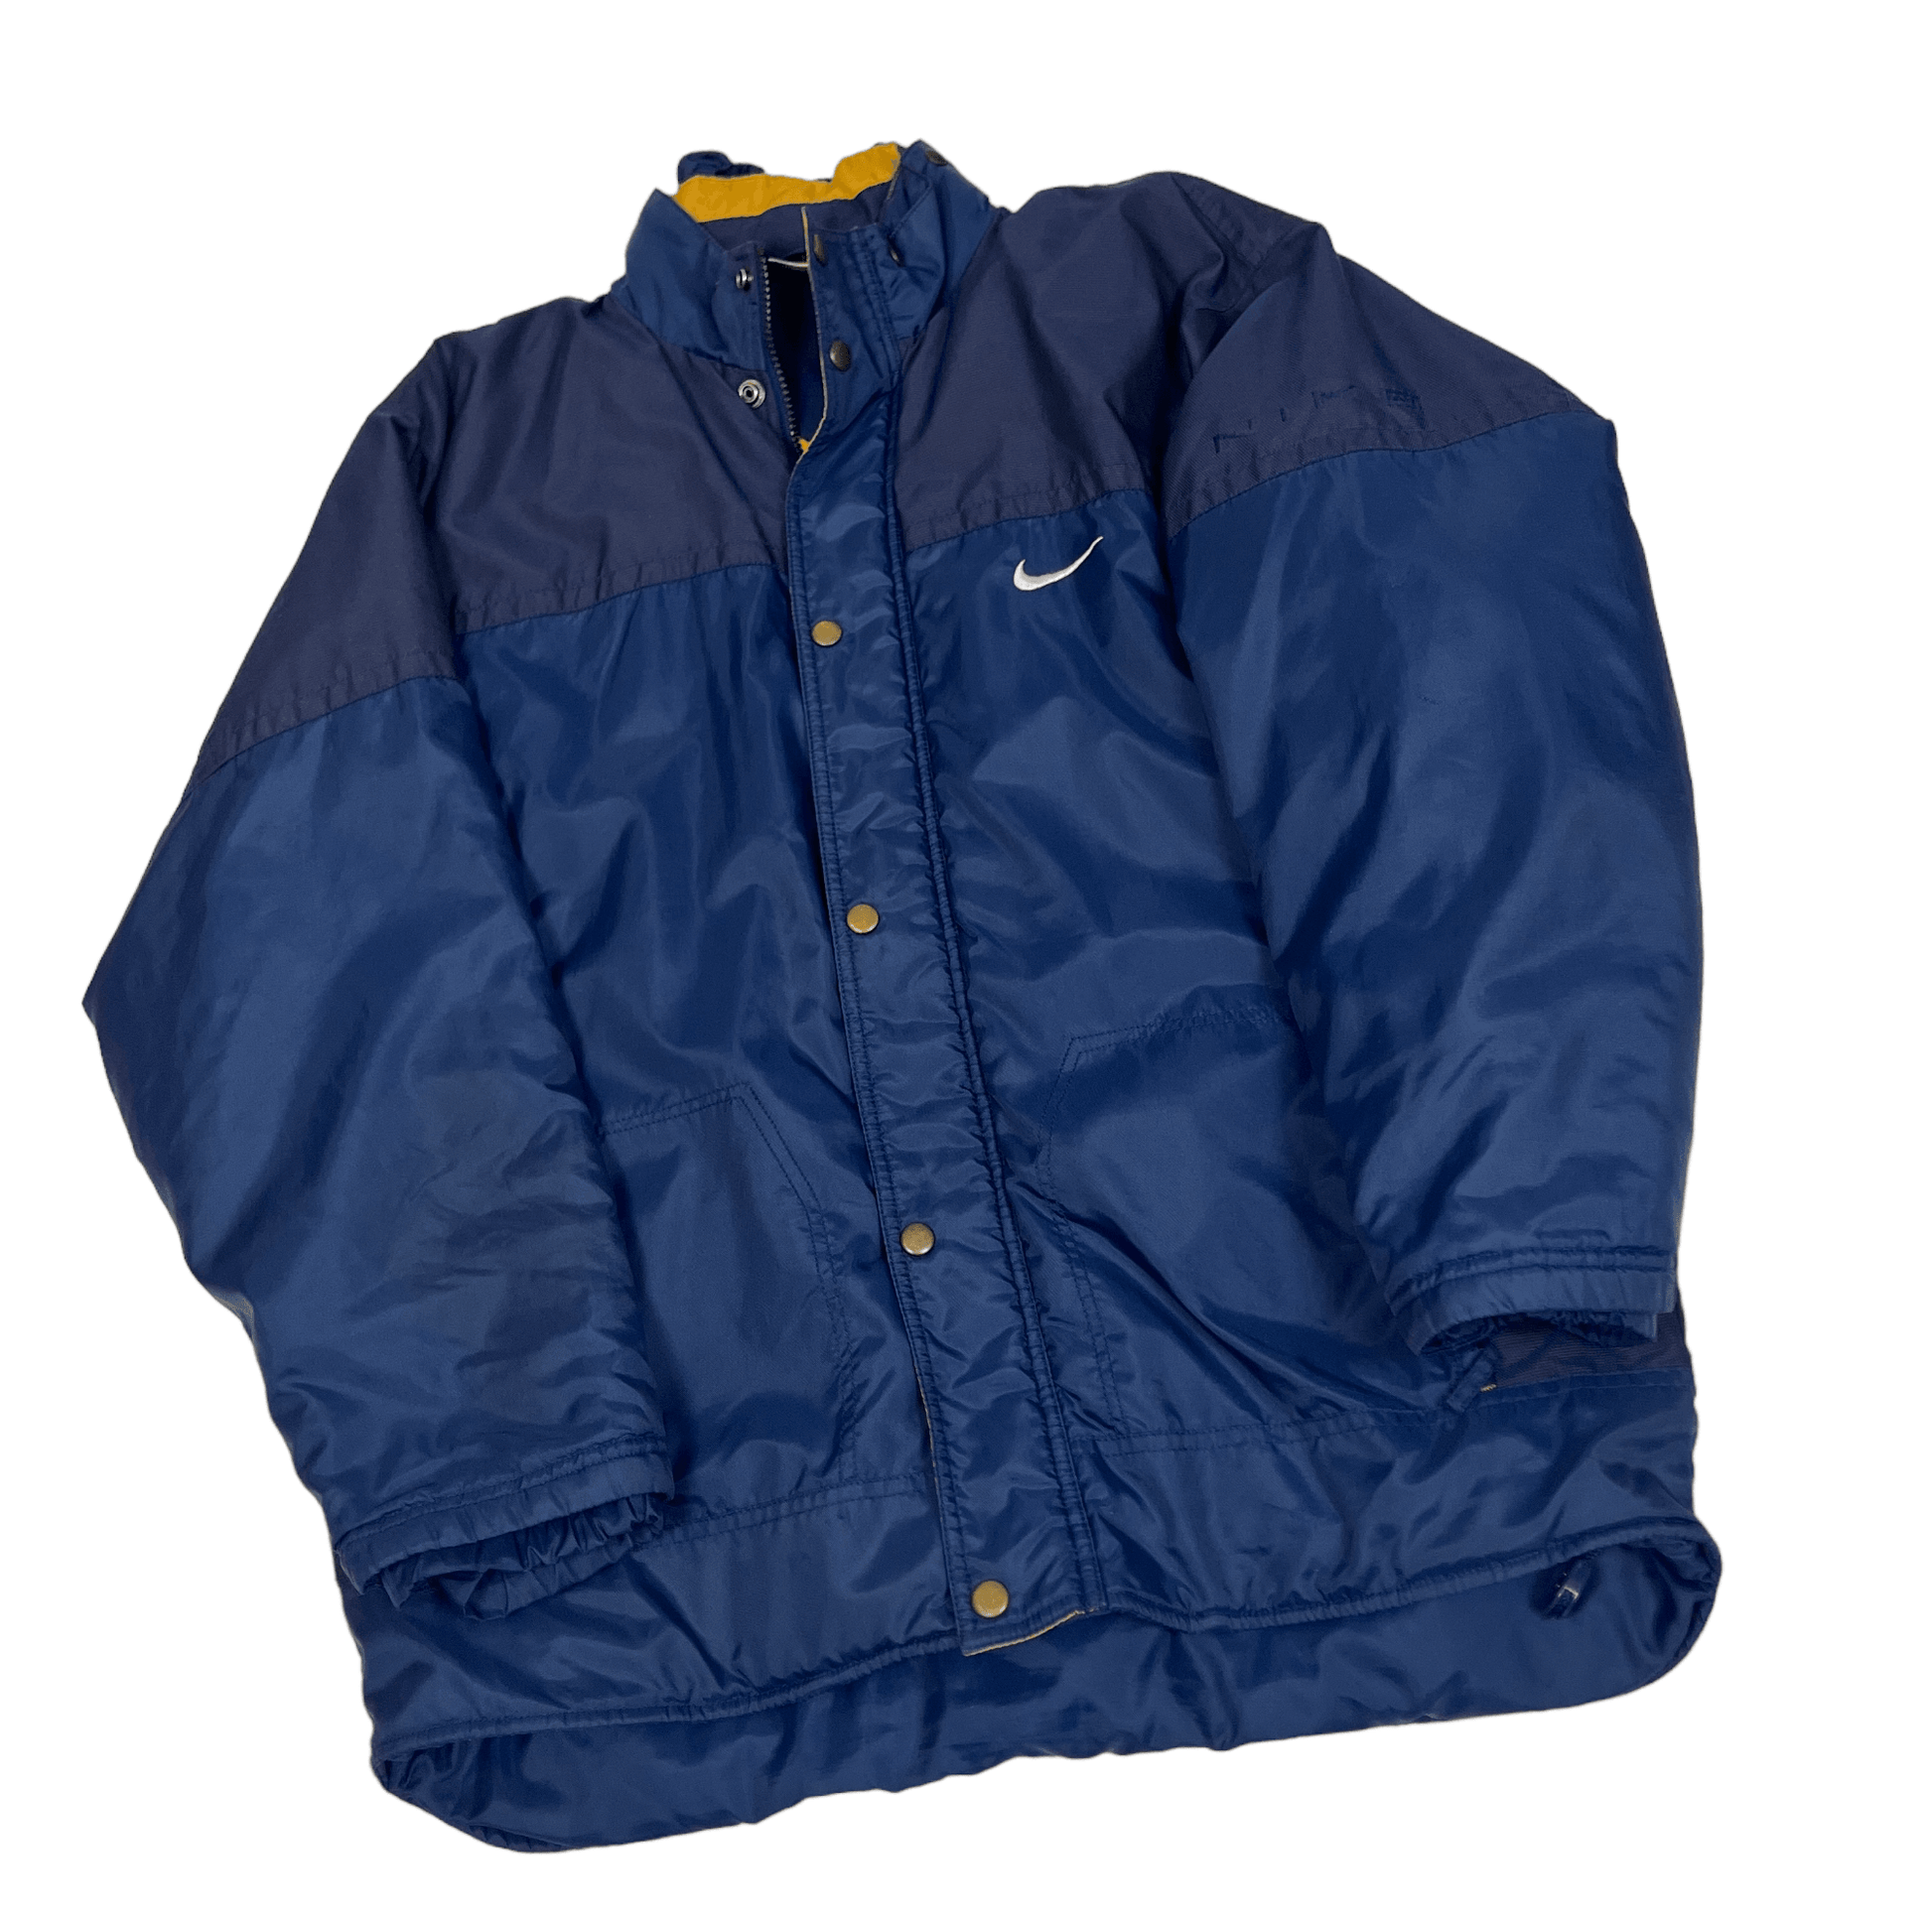 Vintage 90s Navy Blue Nike Coat - Extra Large - The Streetwear Studio